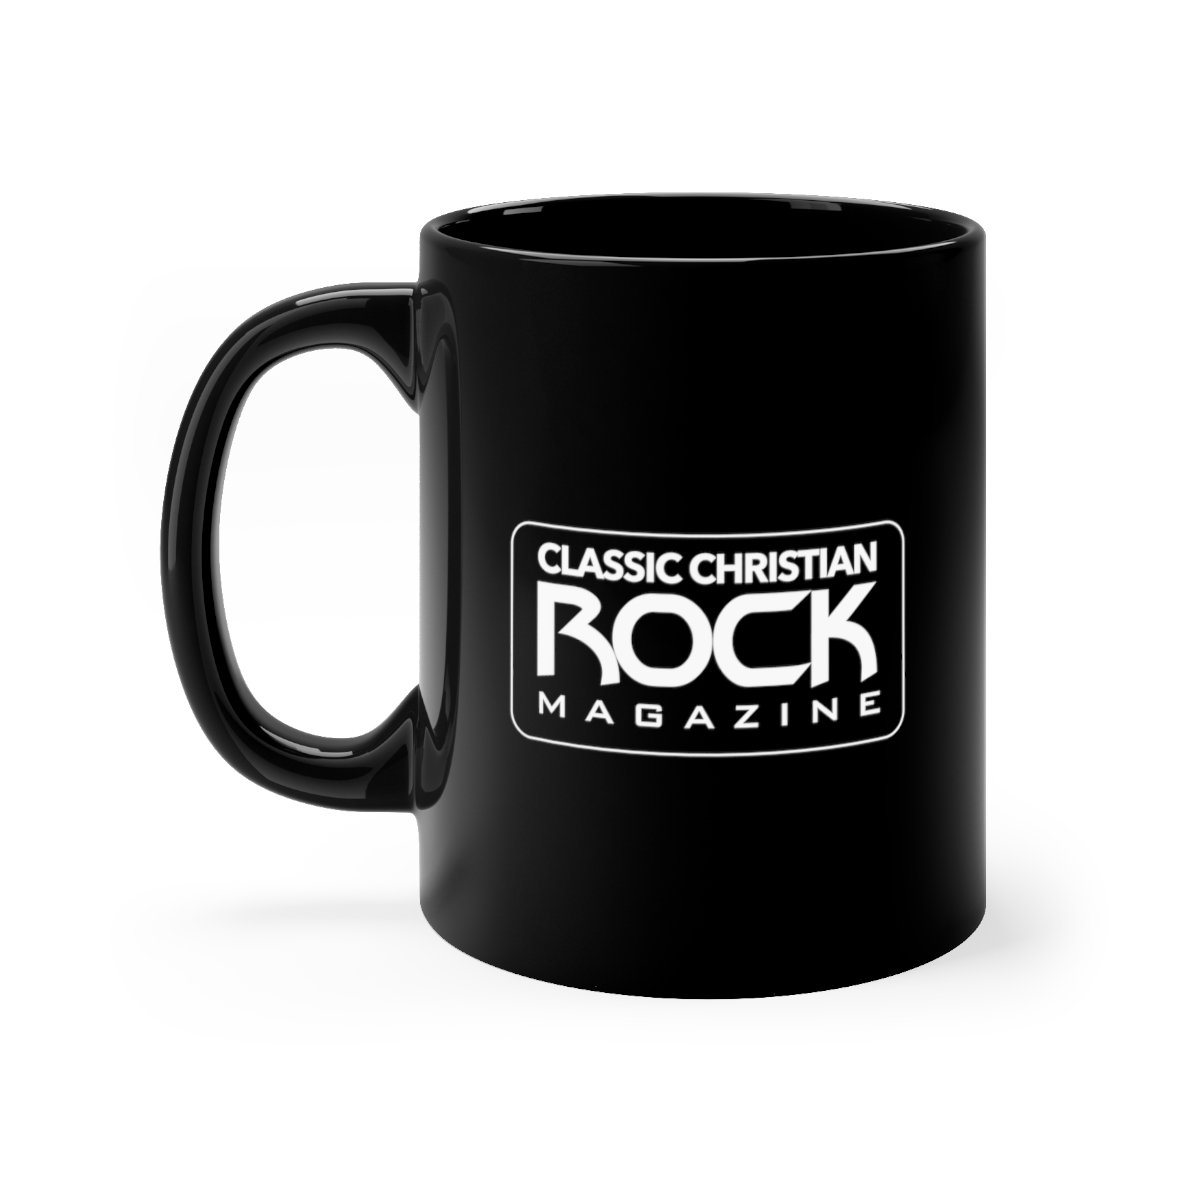 Classic Christian Rock Magazine 11oz Black mug